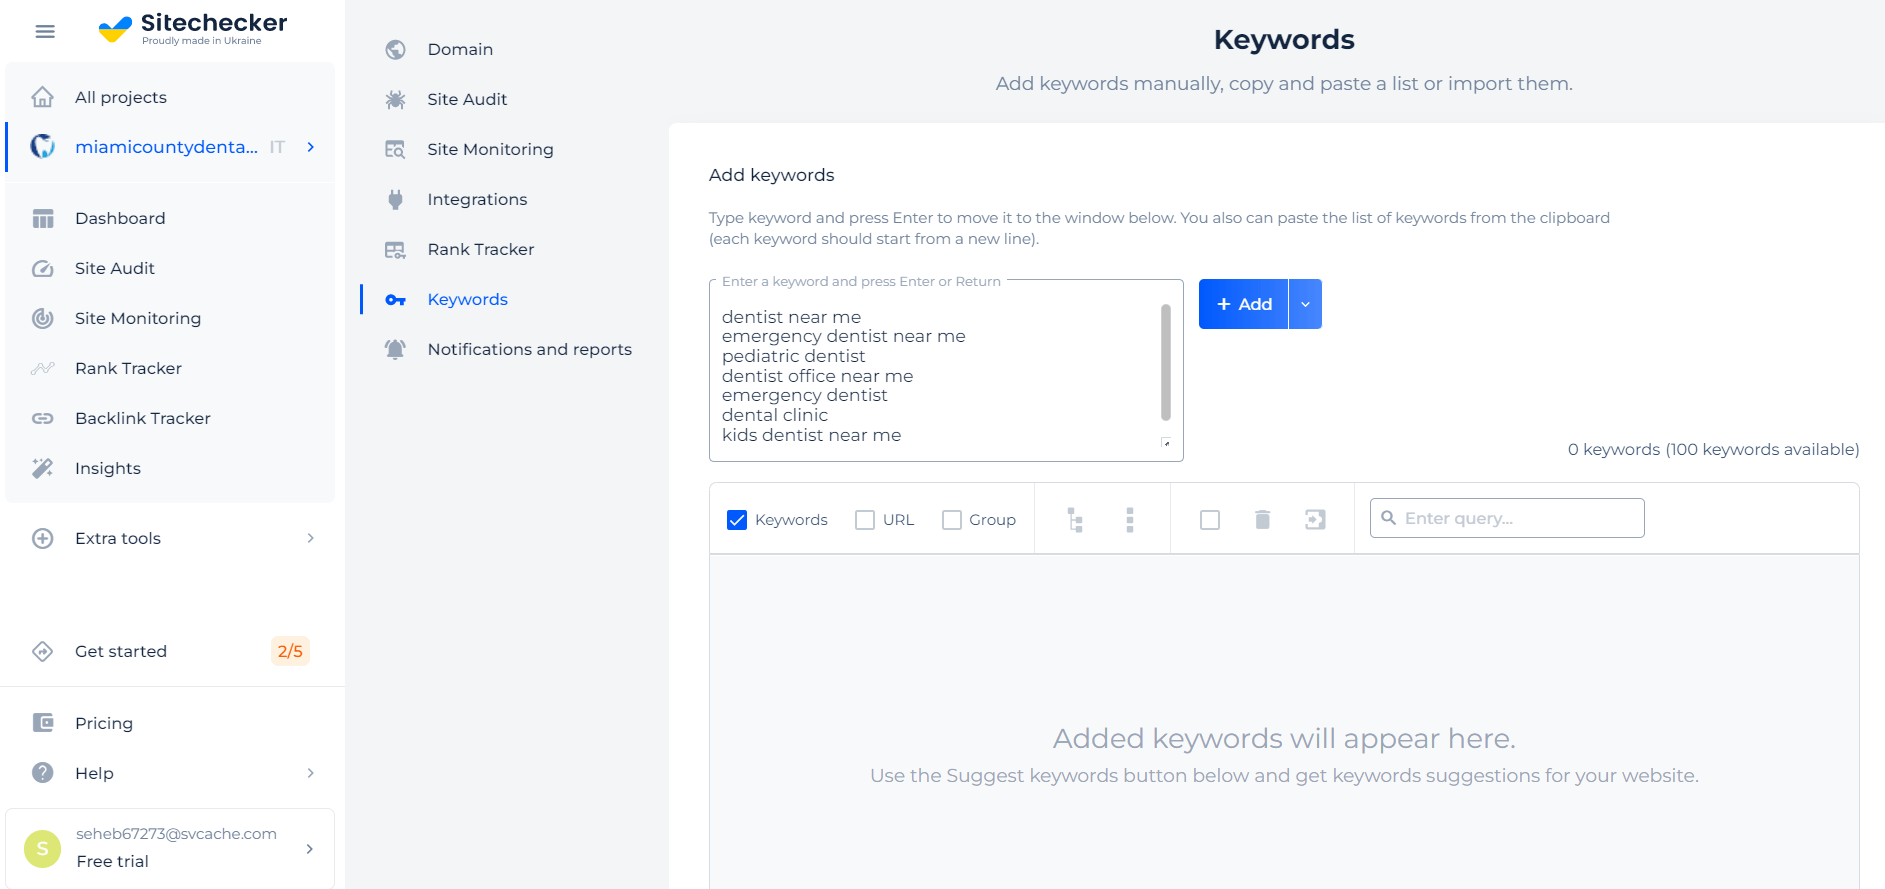 Sitechecker’s tool for adding keywords manually